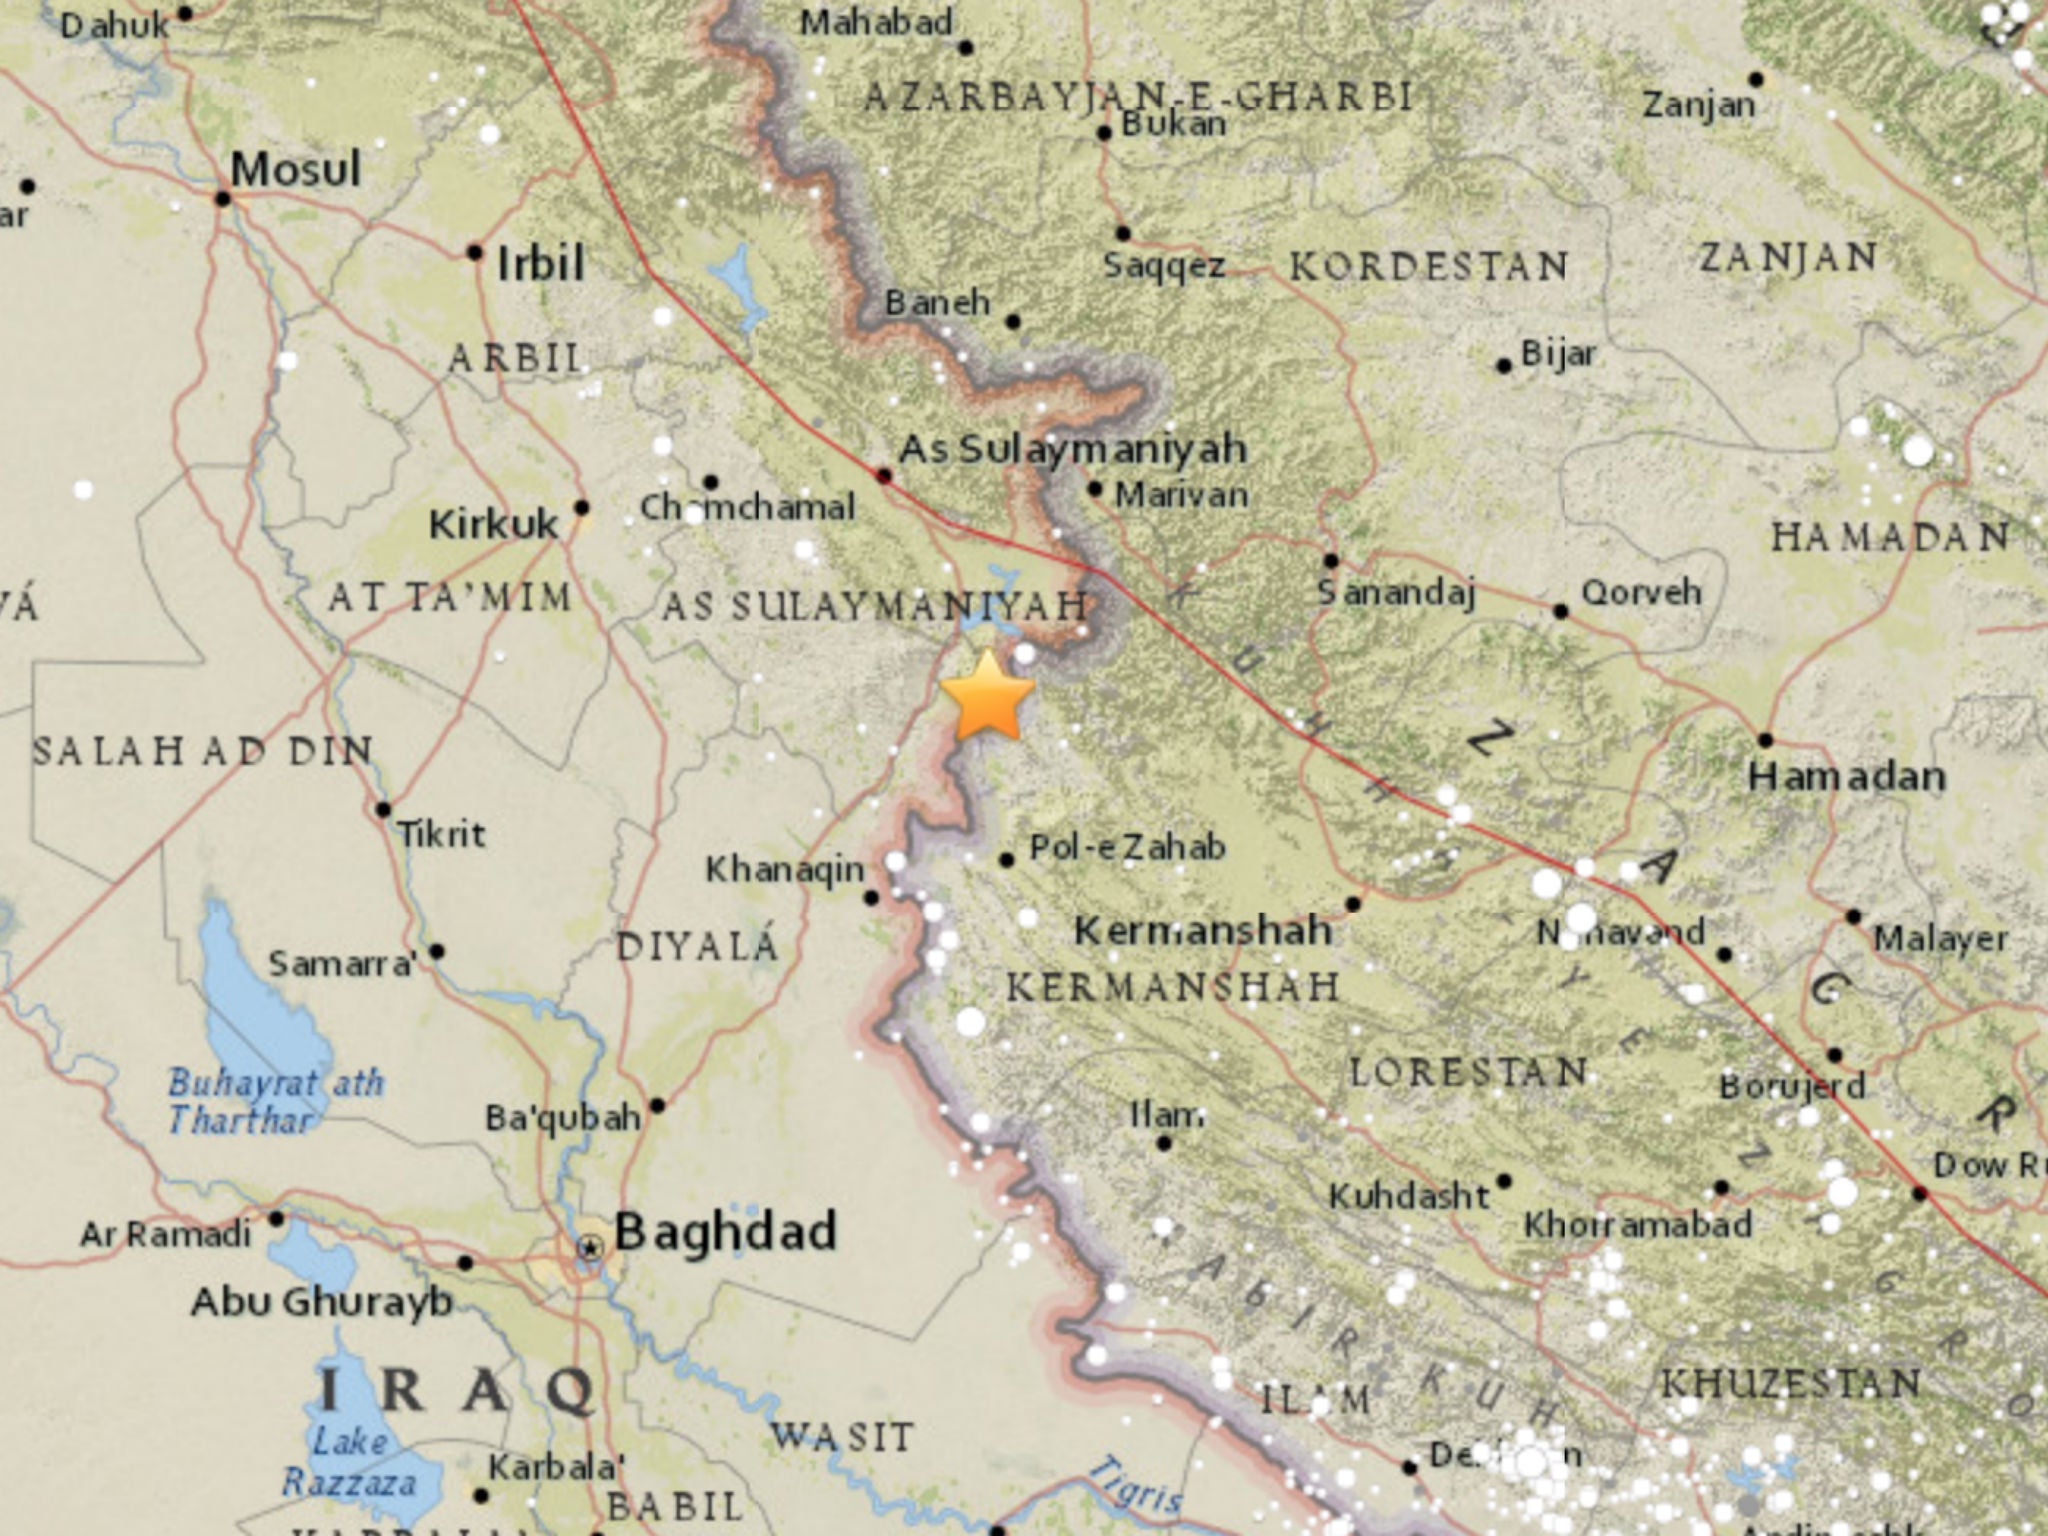 The earthquake struck near the Iraq-Iran border